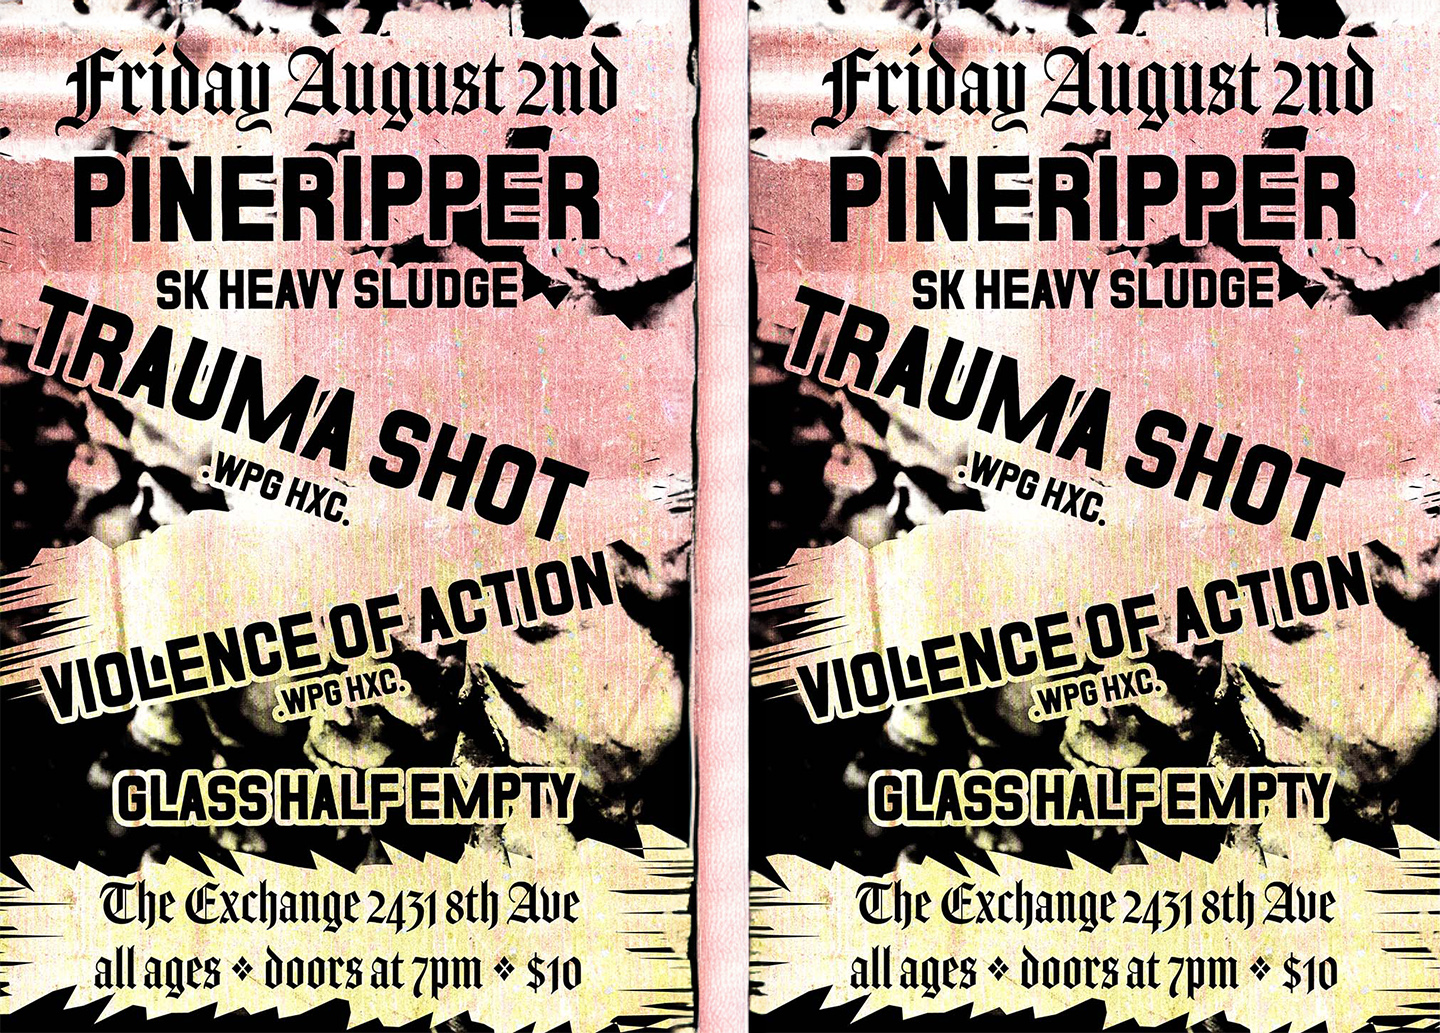 Trauma Shot, Violence of Action, Pineripper, Glass Half Empty